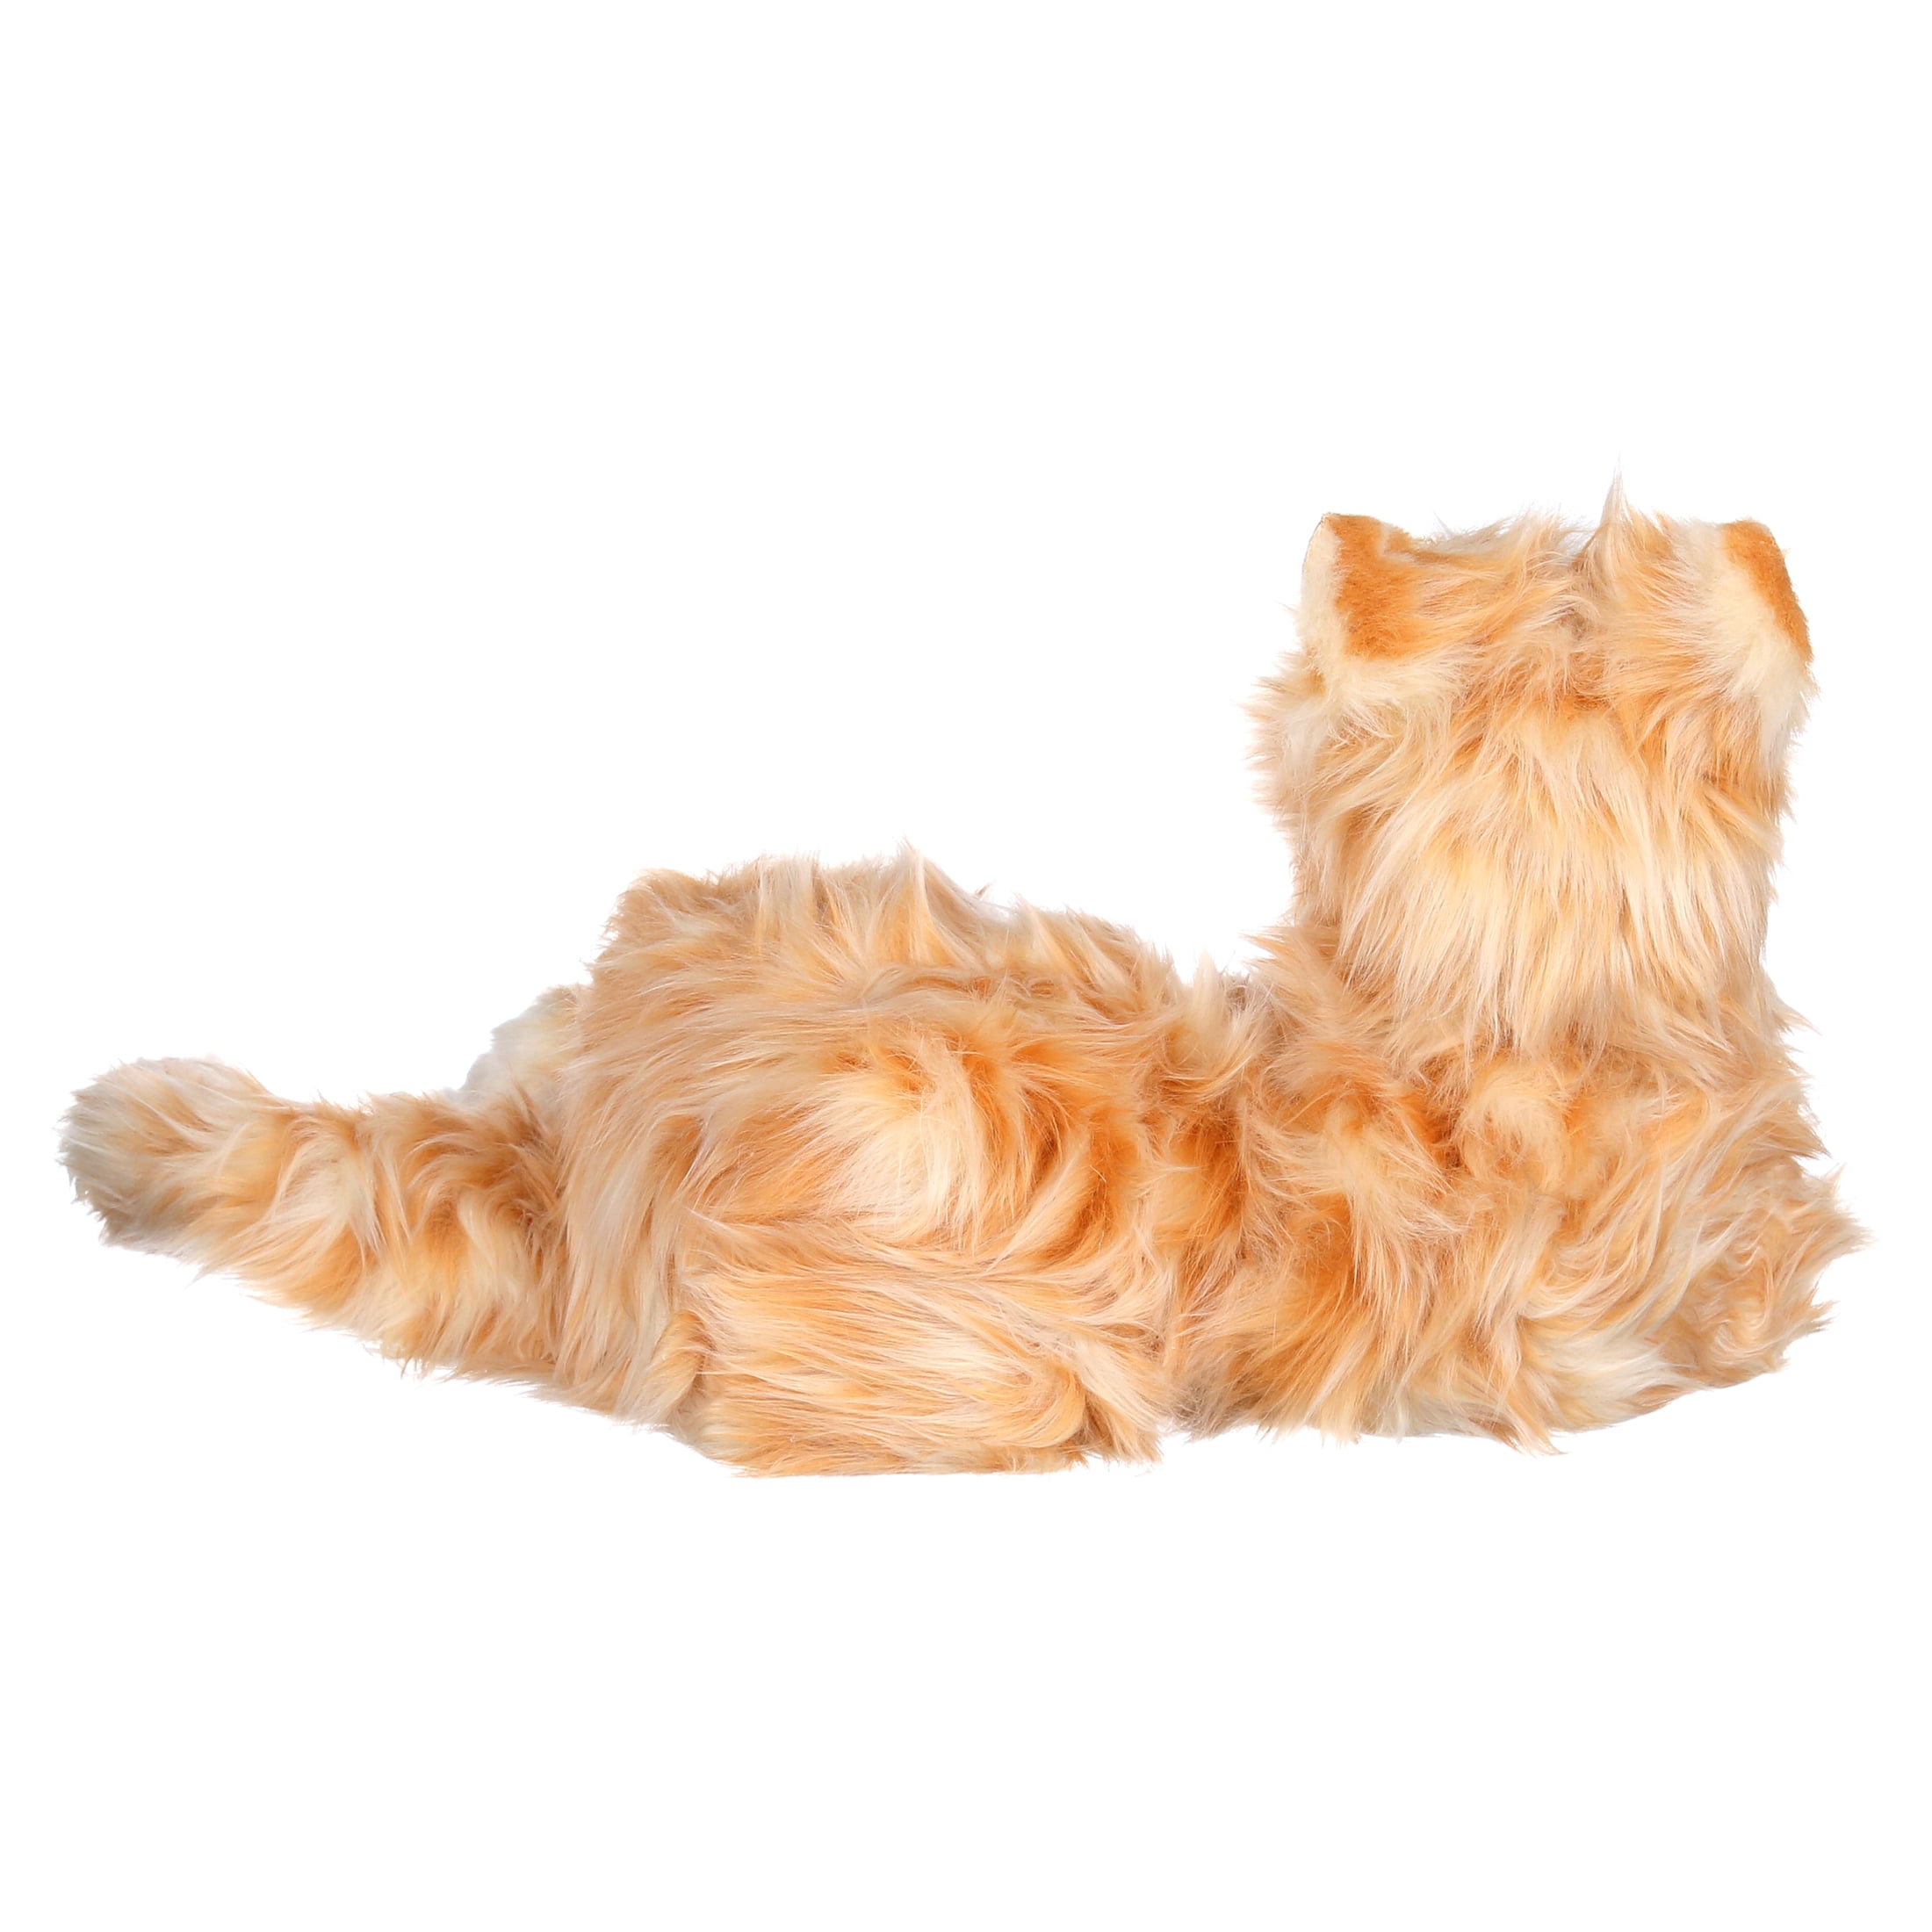 Joy for All Companion Pet Cat Orange Tabby B7592 - Best Buy